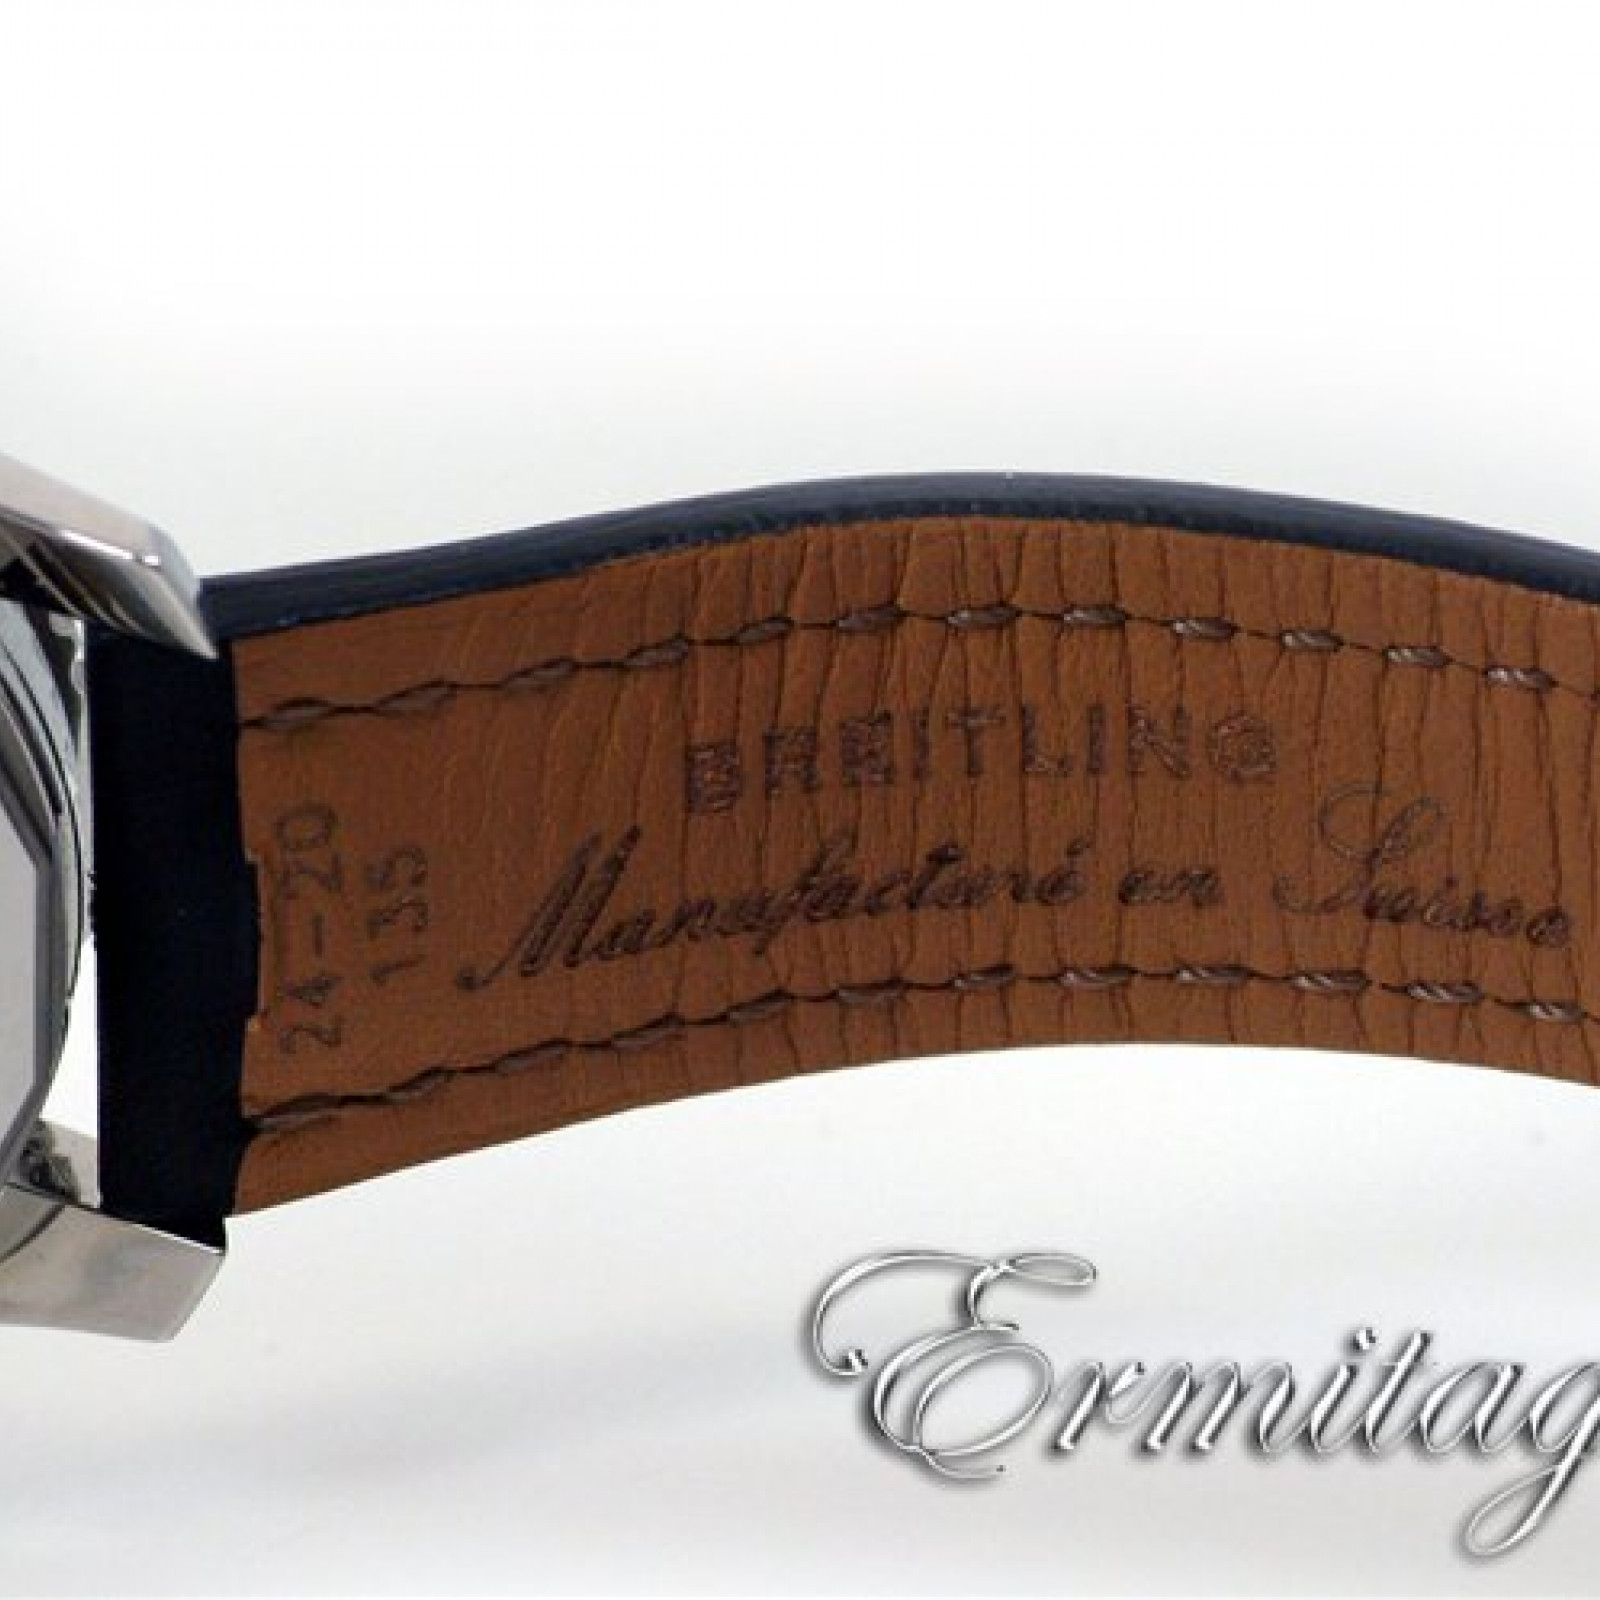 Breitling Navitimer World Chronograph A24322 Steel